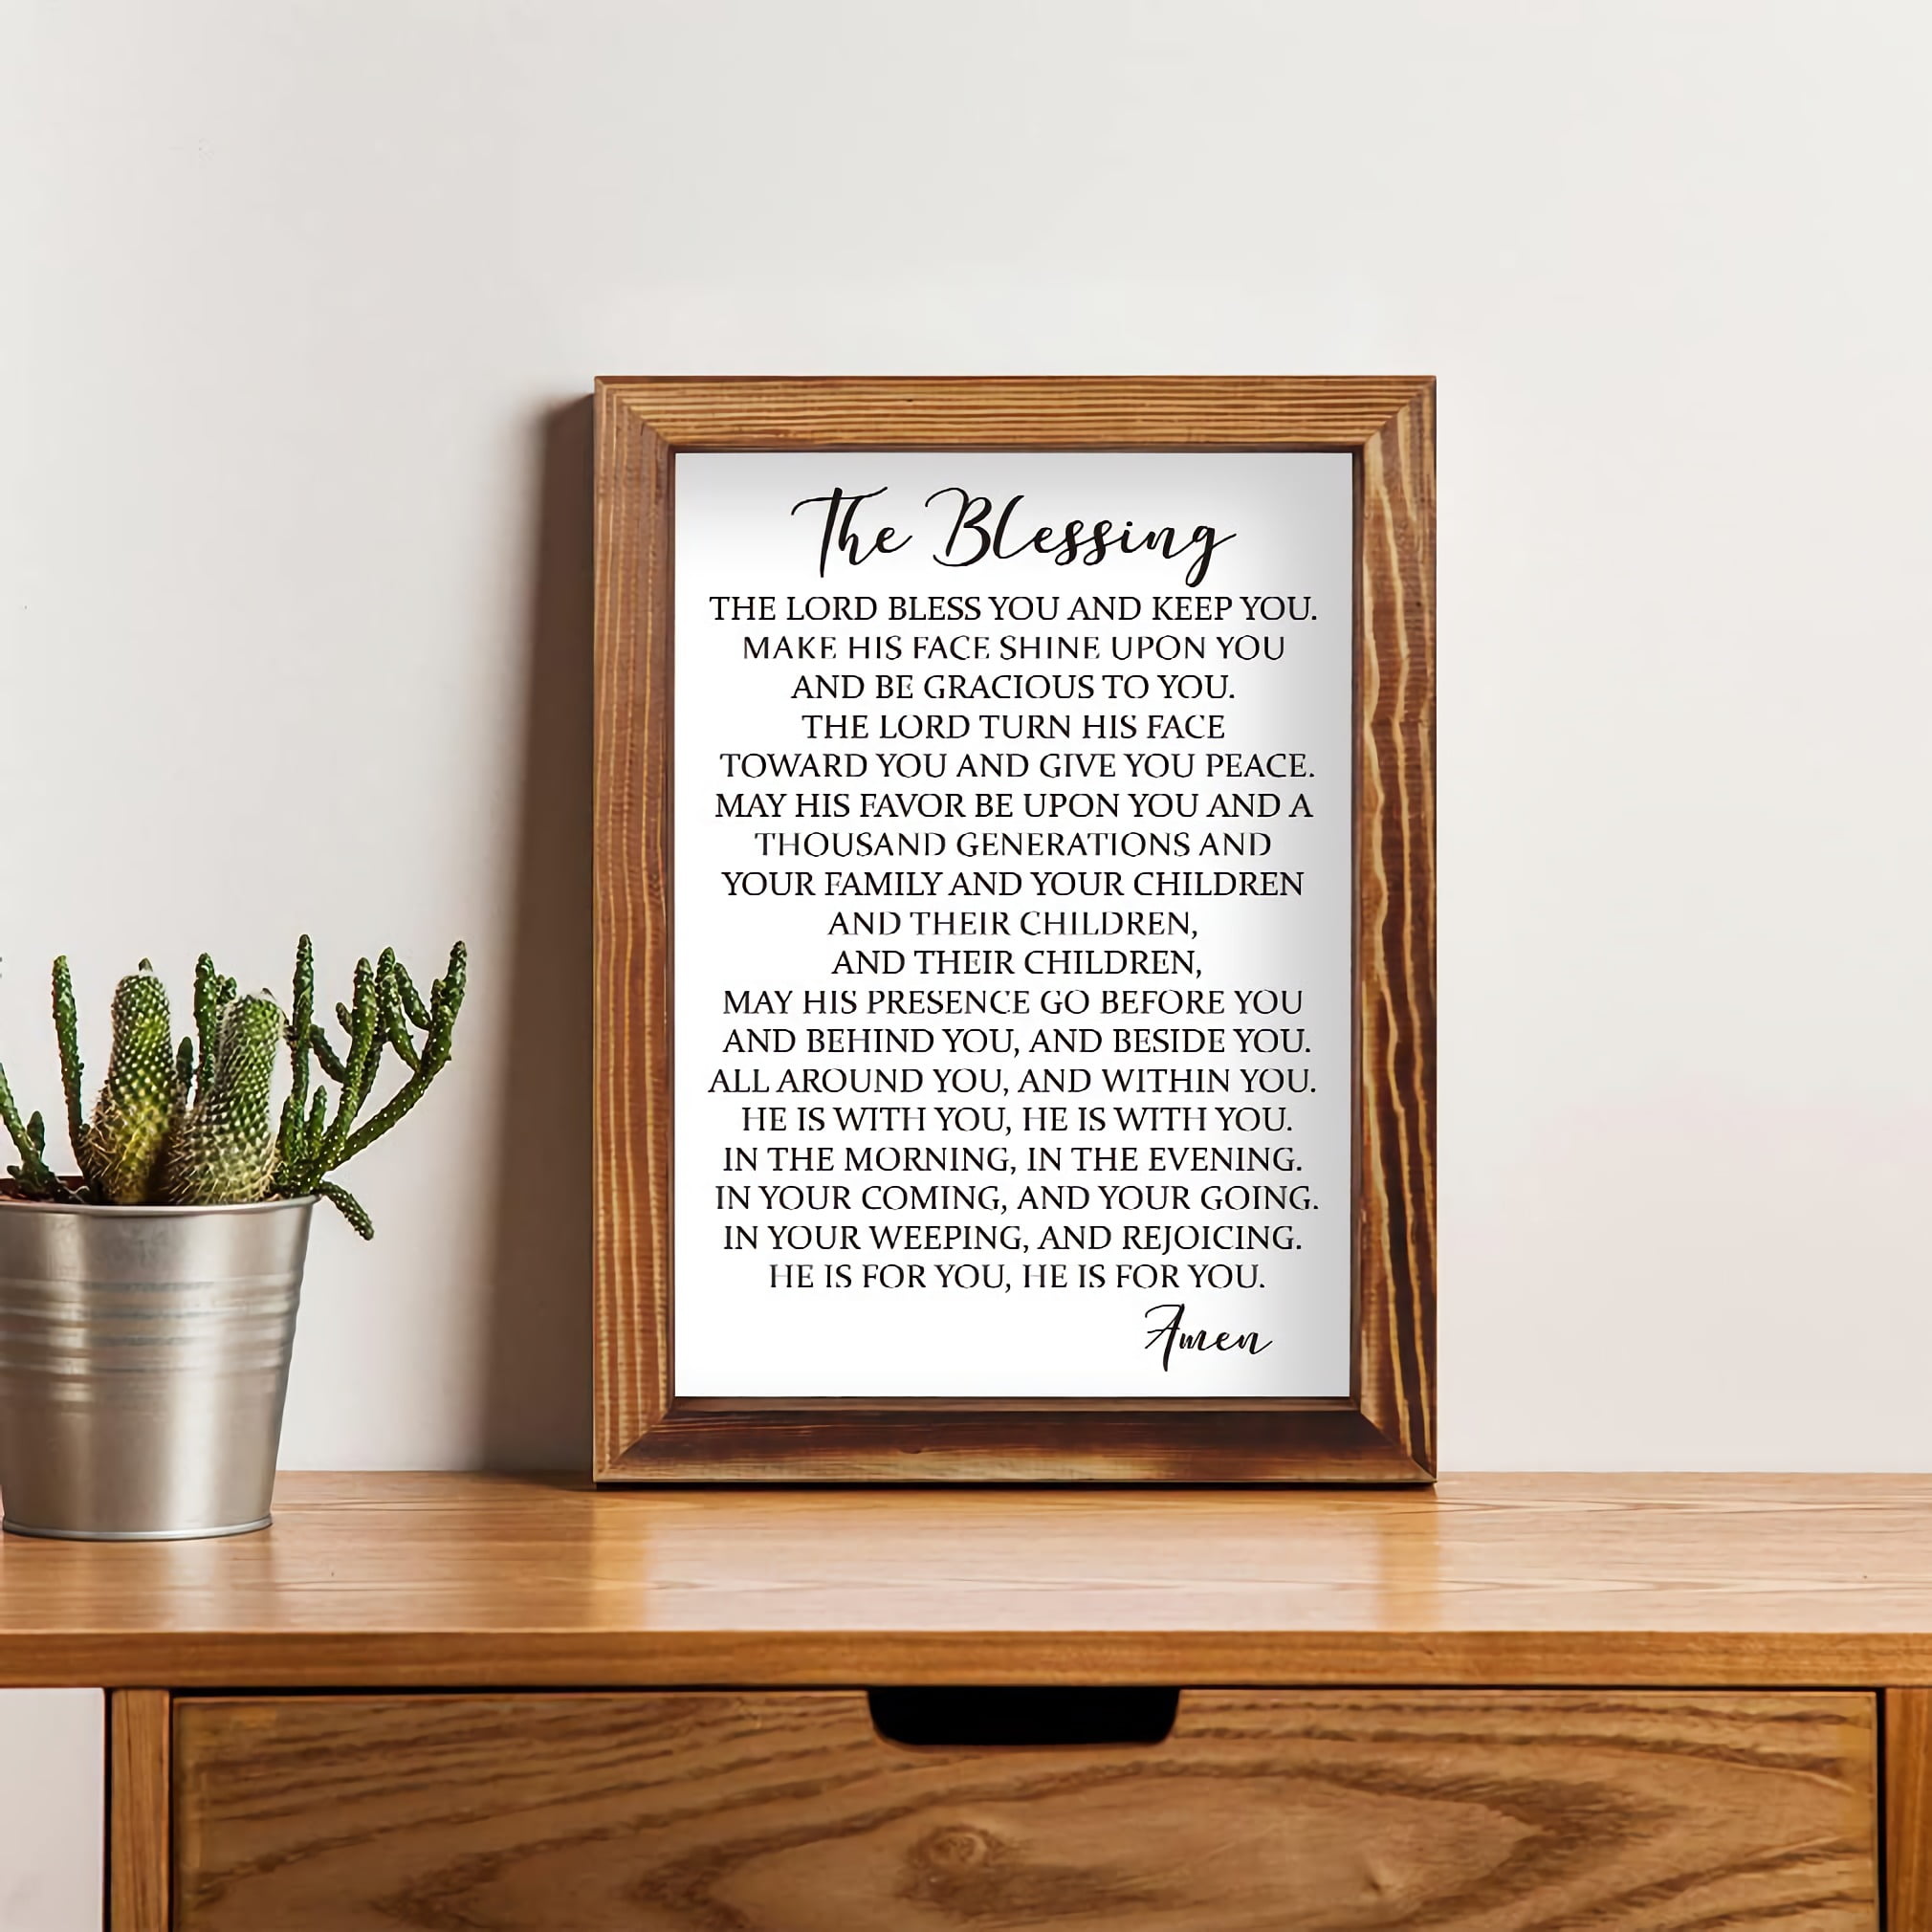 The Blessing Lyrics Rustic Framed Wood Sign Plaque Inspirational Bible Verse Christian Home Decor 11 16 Prayer Table Sign For Home Bedroom Kitchen Living Room Walmart Com